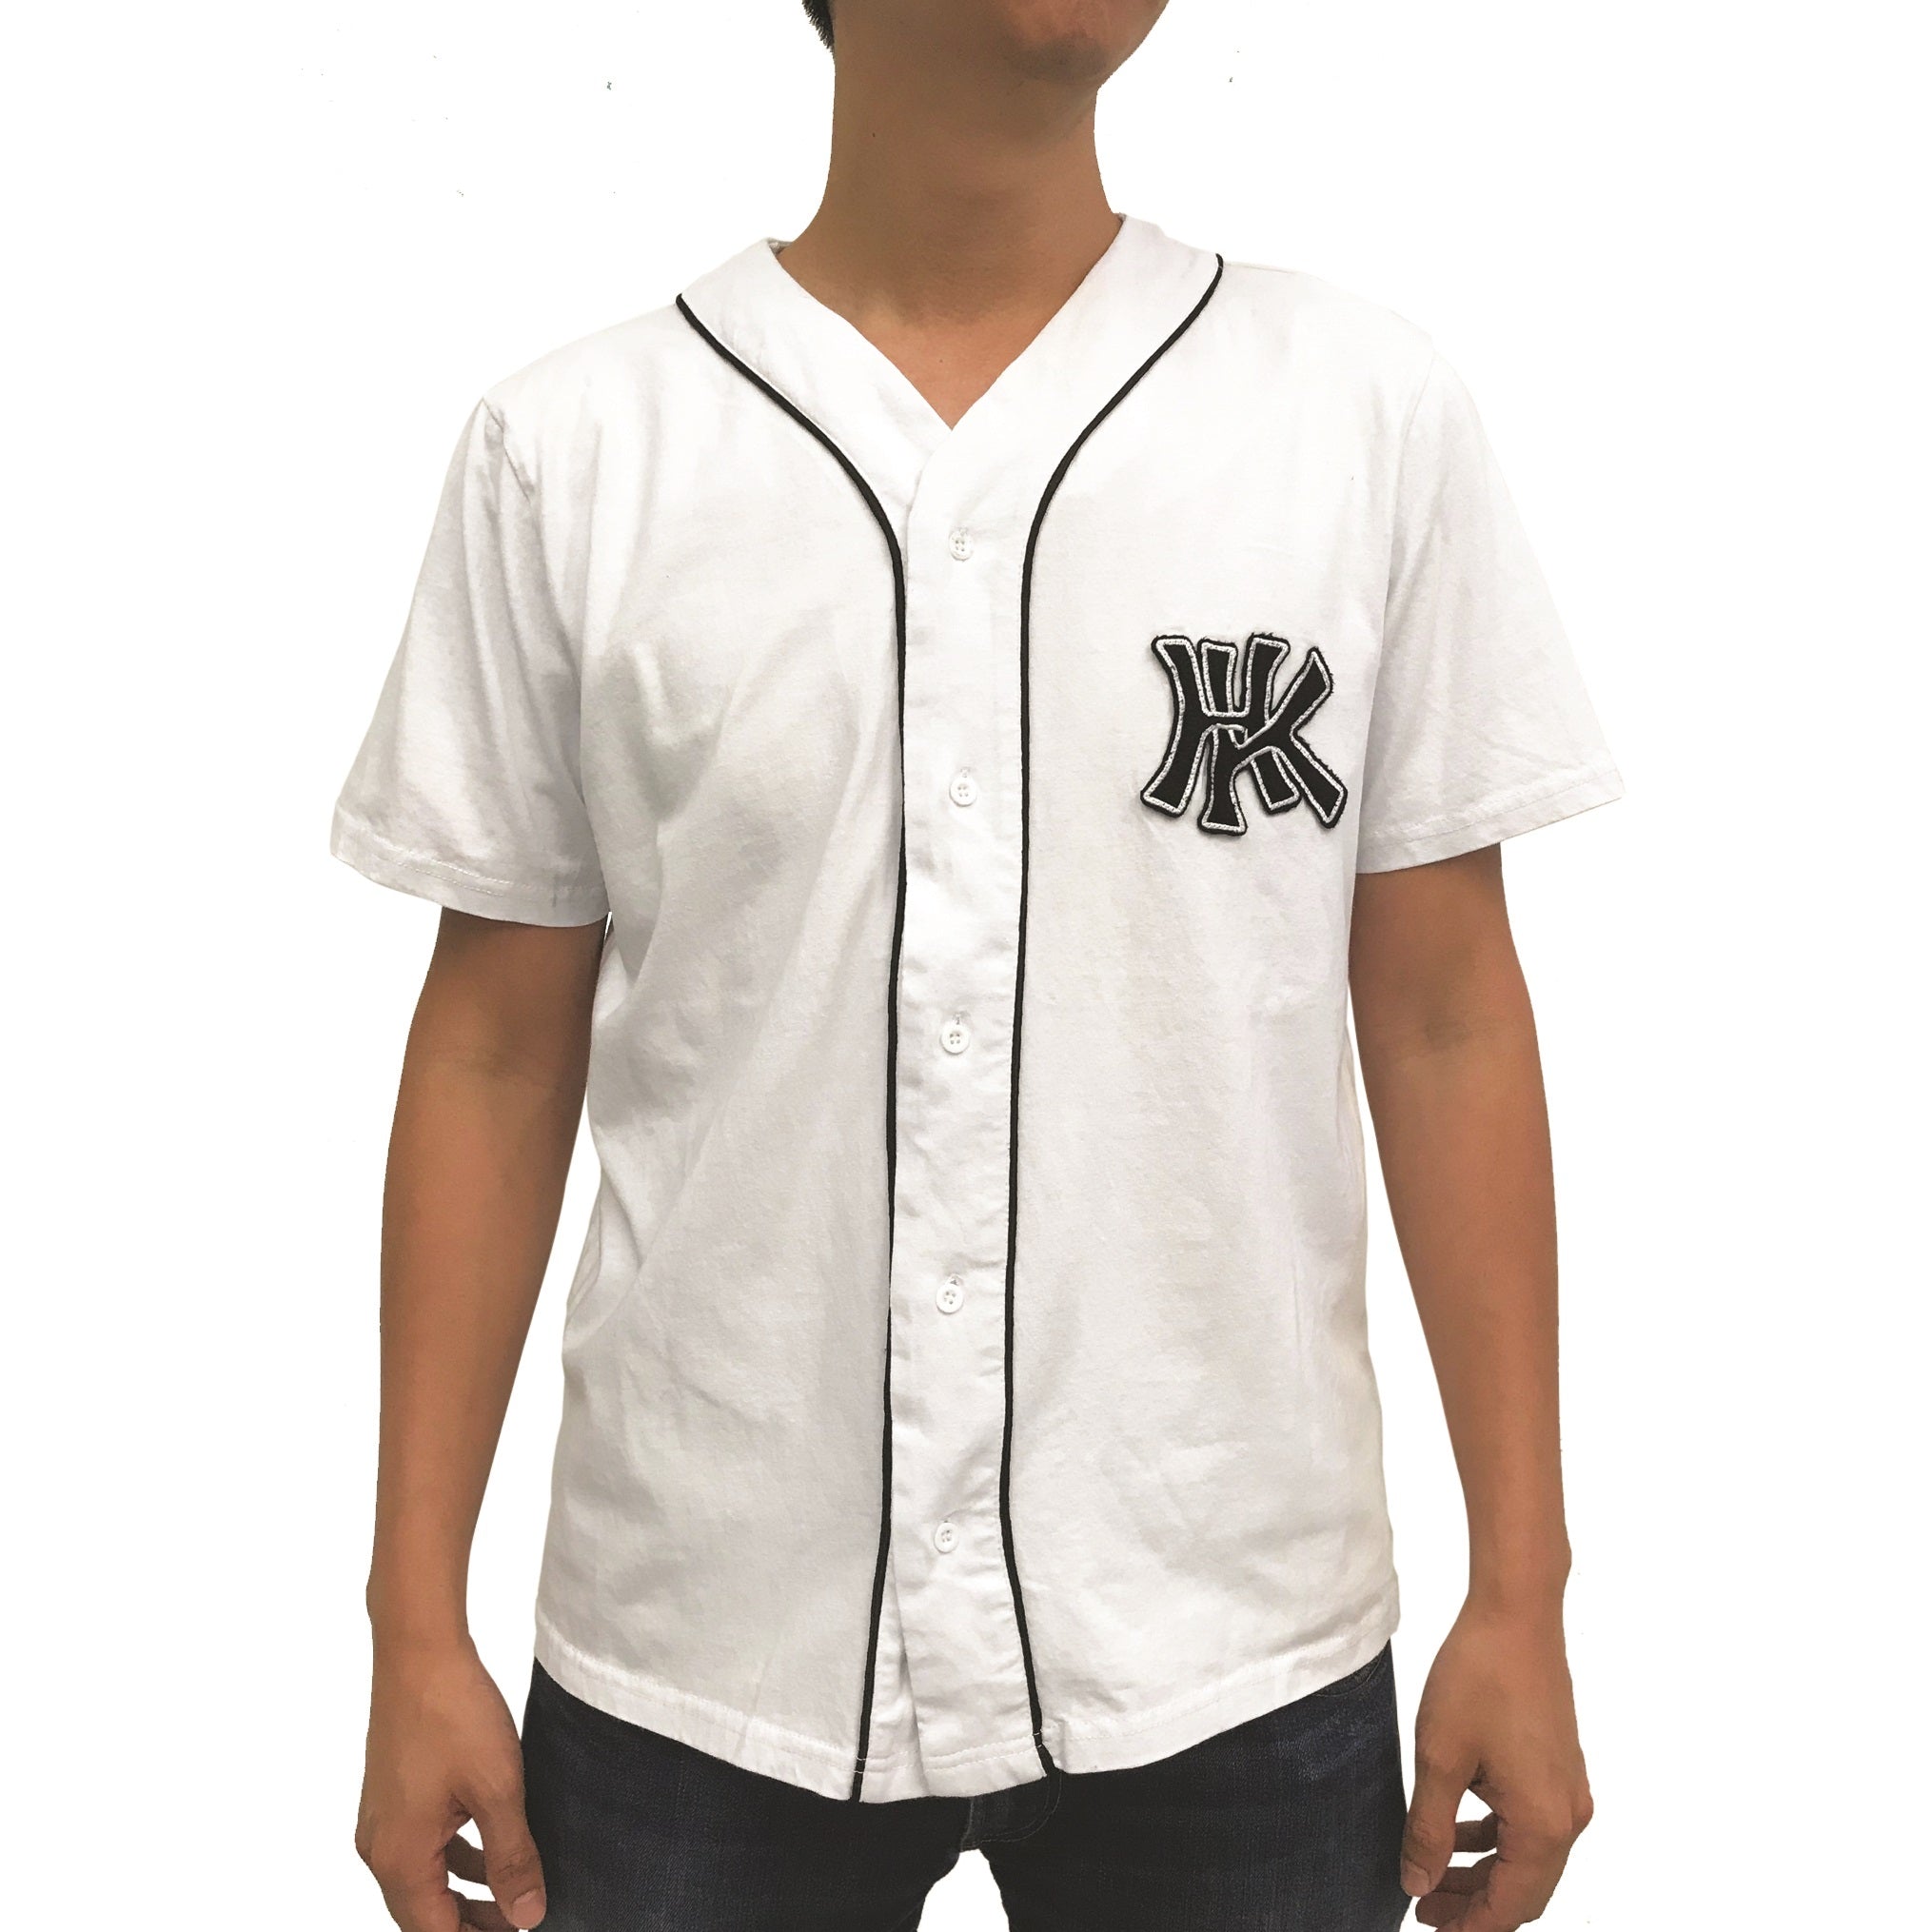 HK Baseball Jersey, White